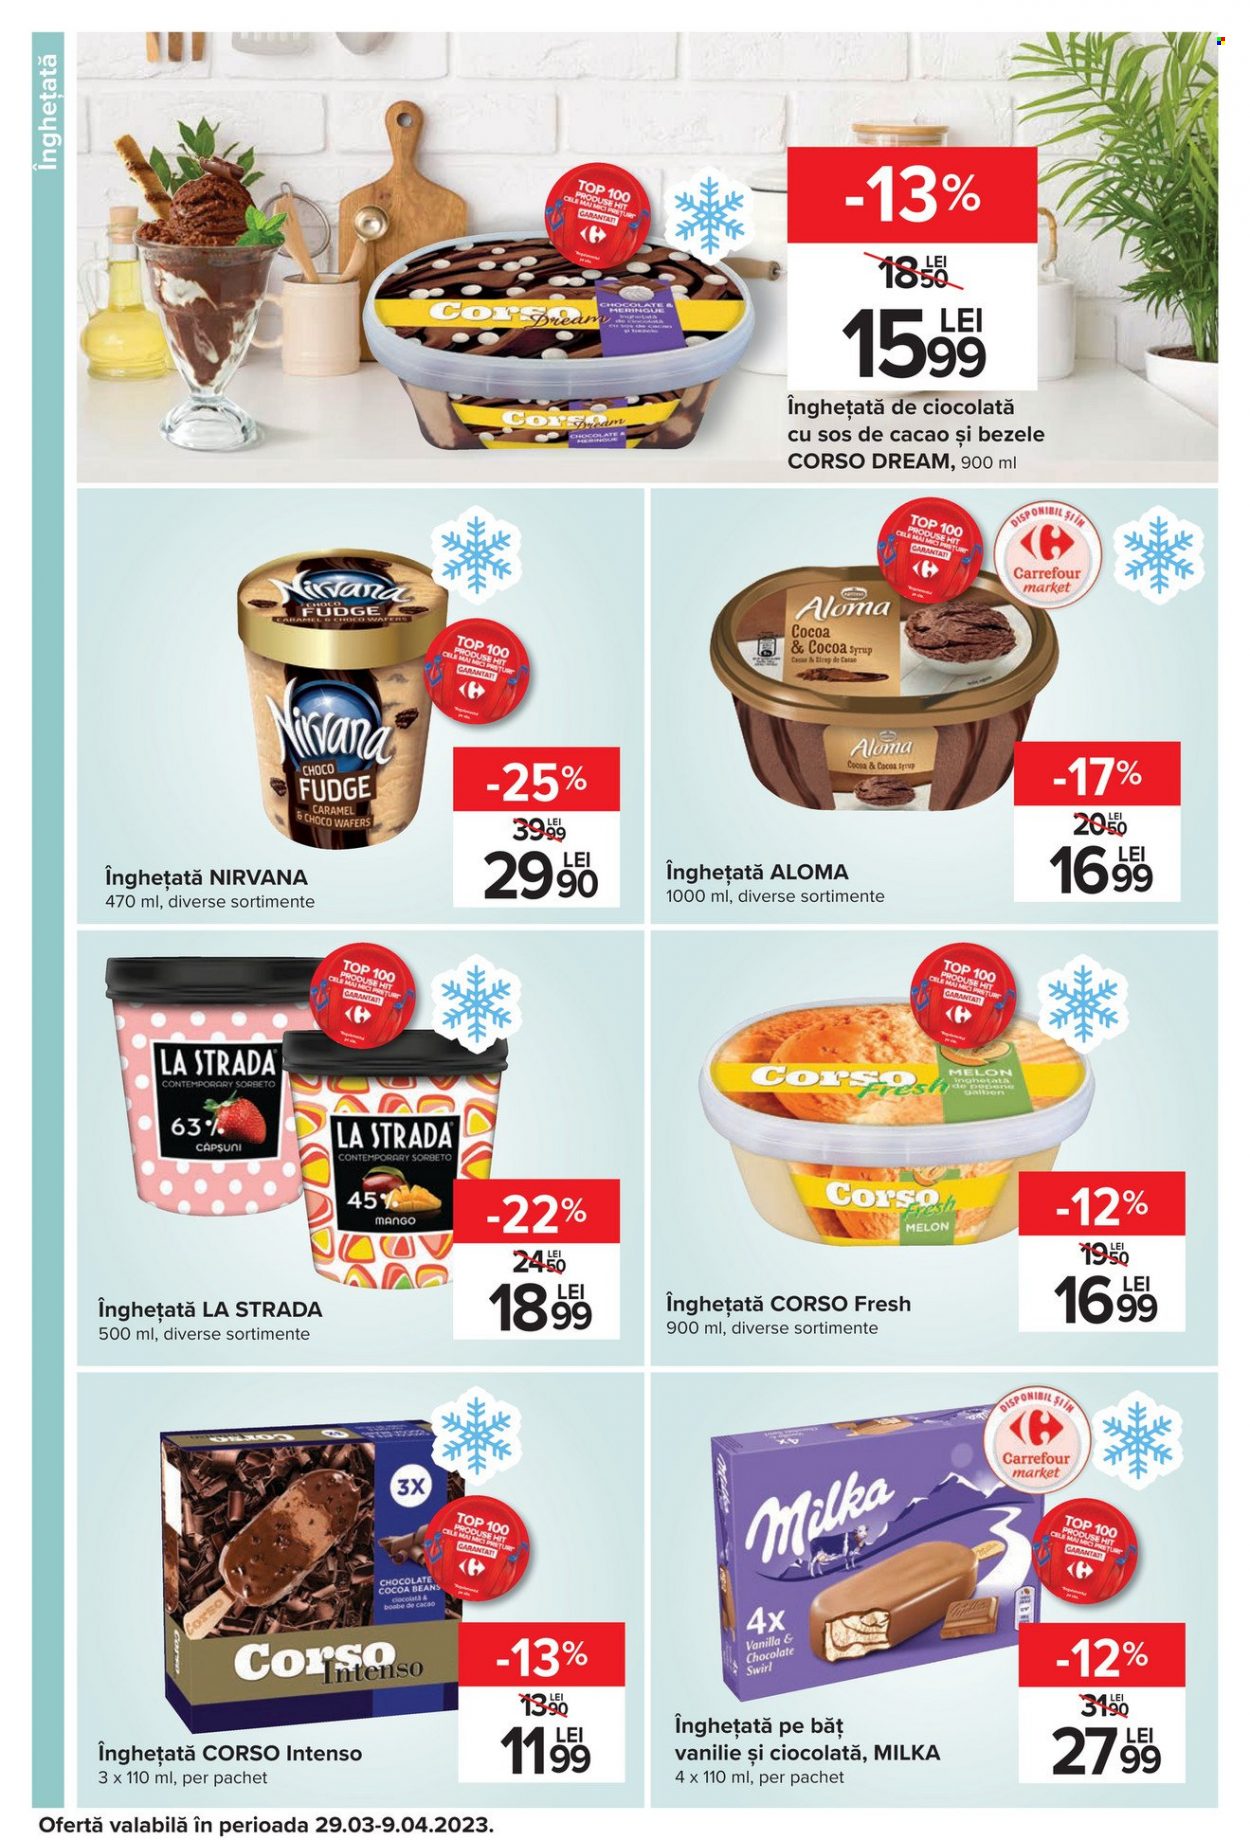 thumbnail - Cataloage Carrefour - 29.03.2023 - 09.04.2023 - Produse în vânzare - mango, Milka, înghețată, marshmallows. Pagina 18.